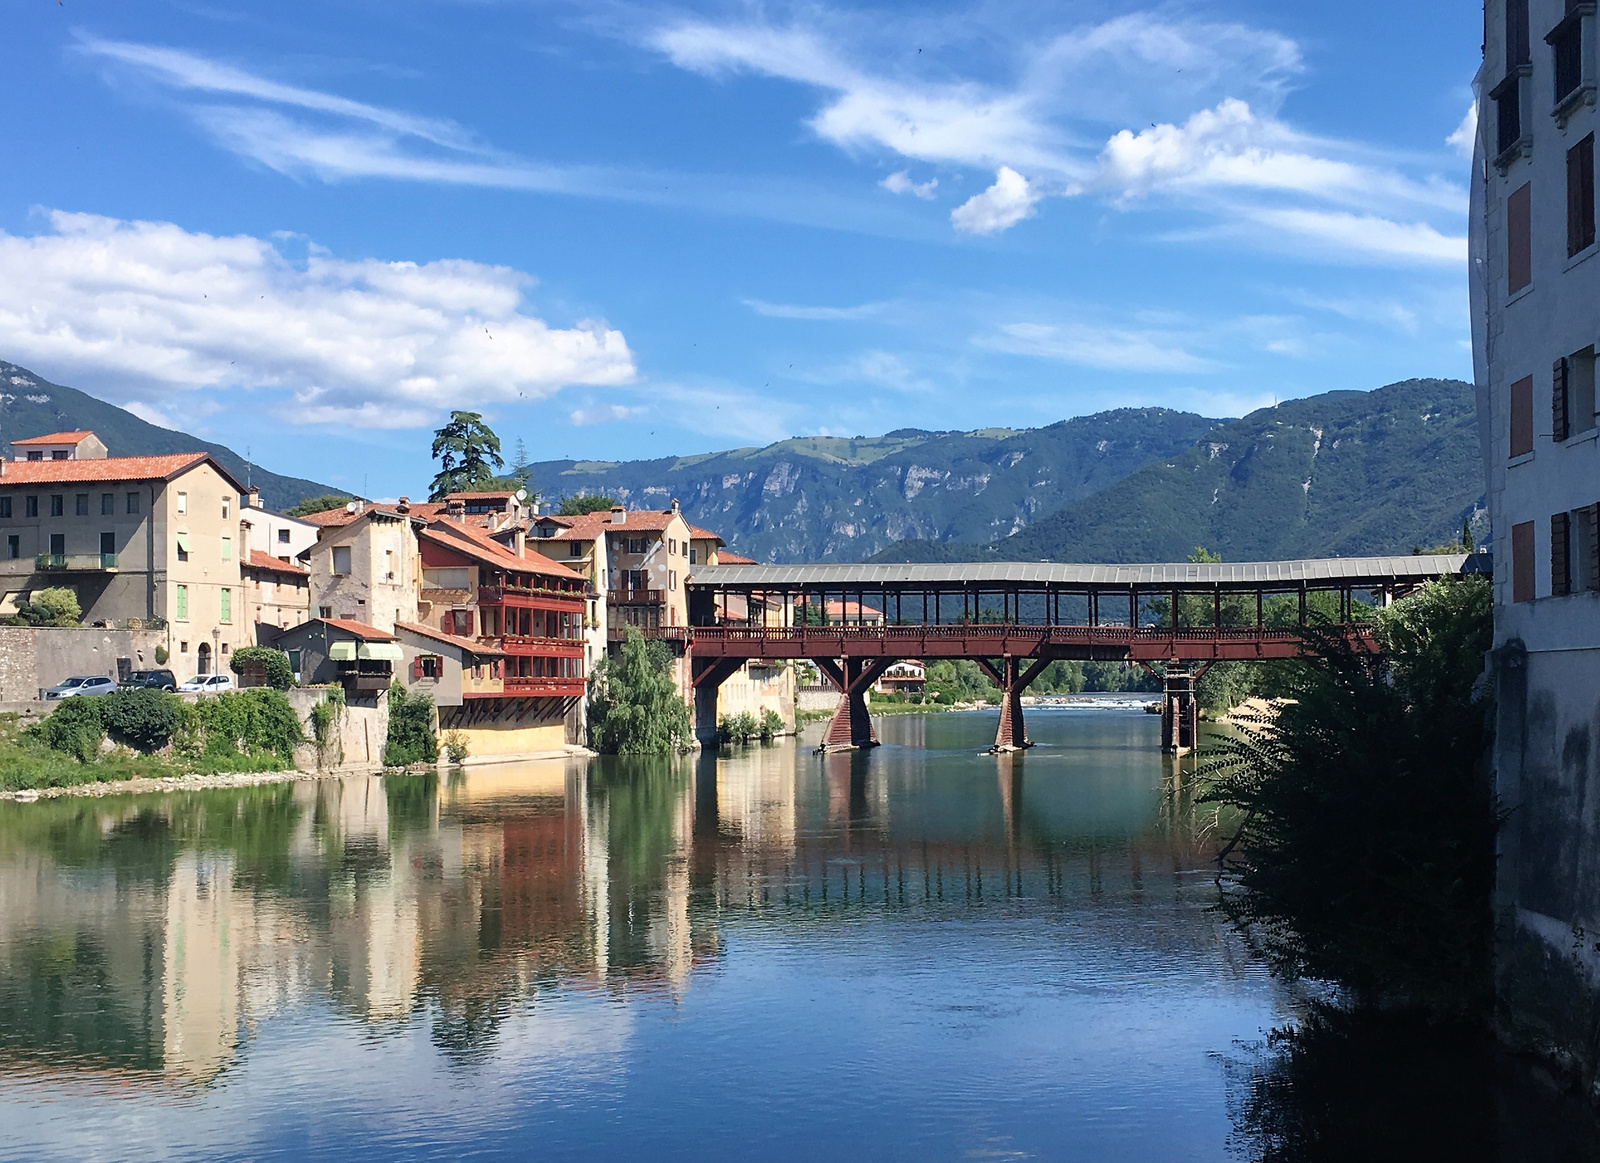 Ponte degli Alpini